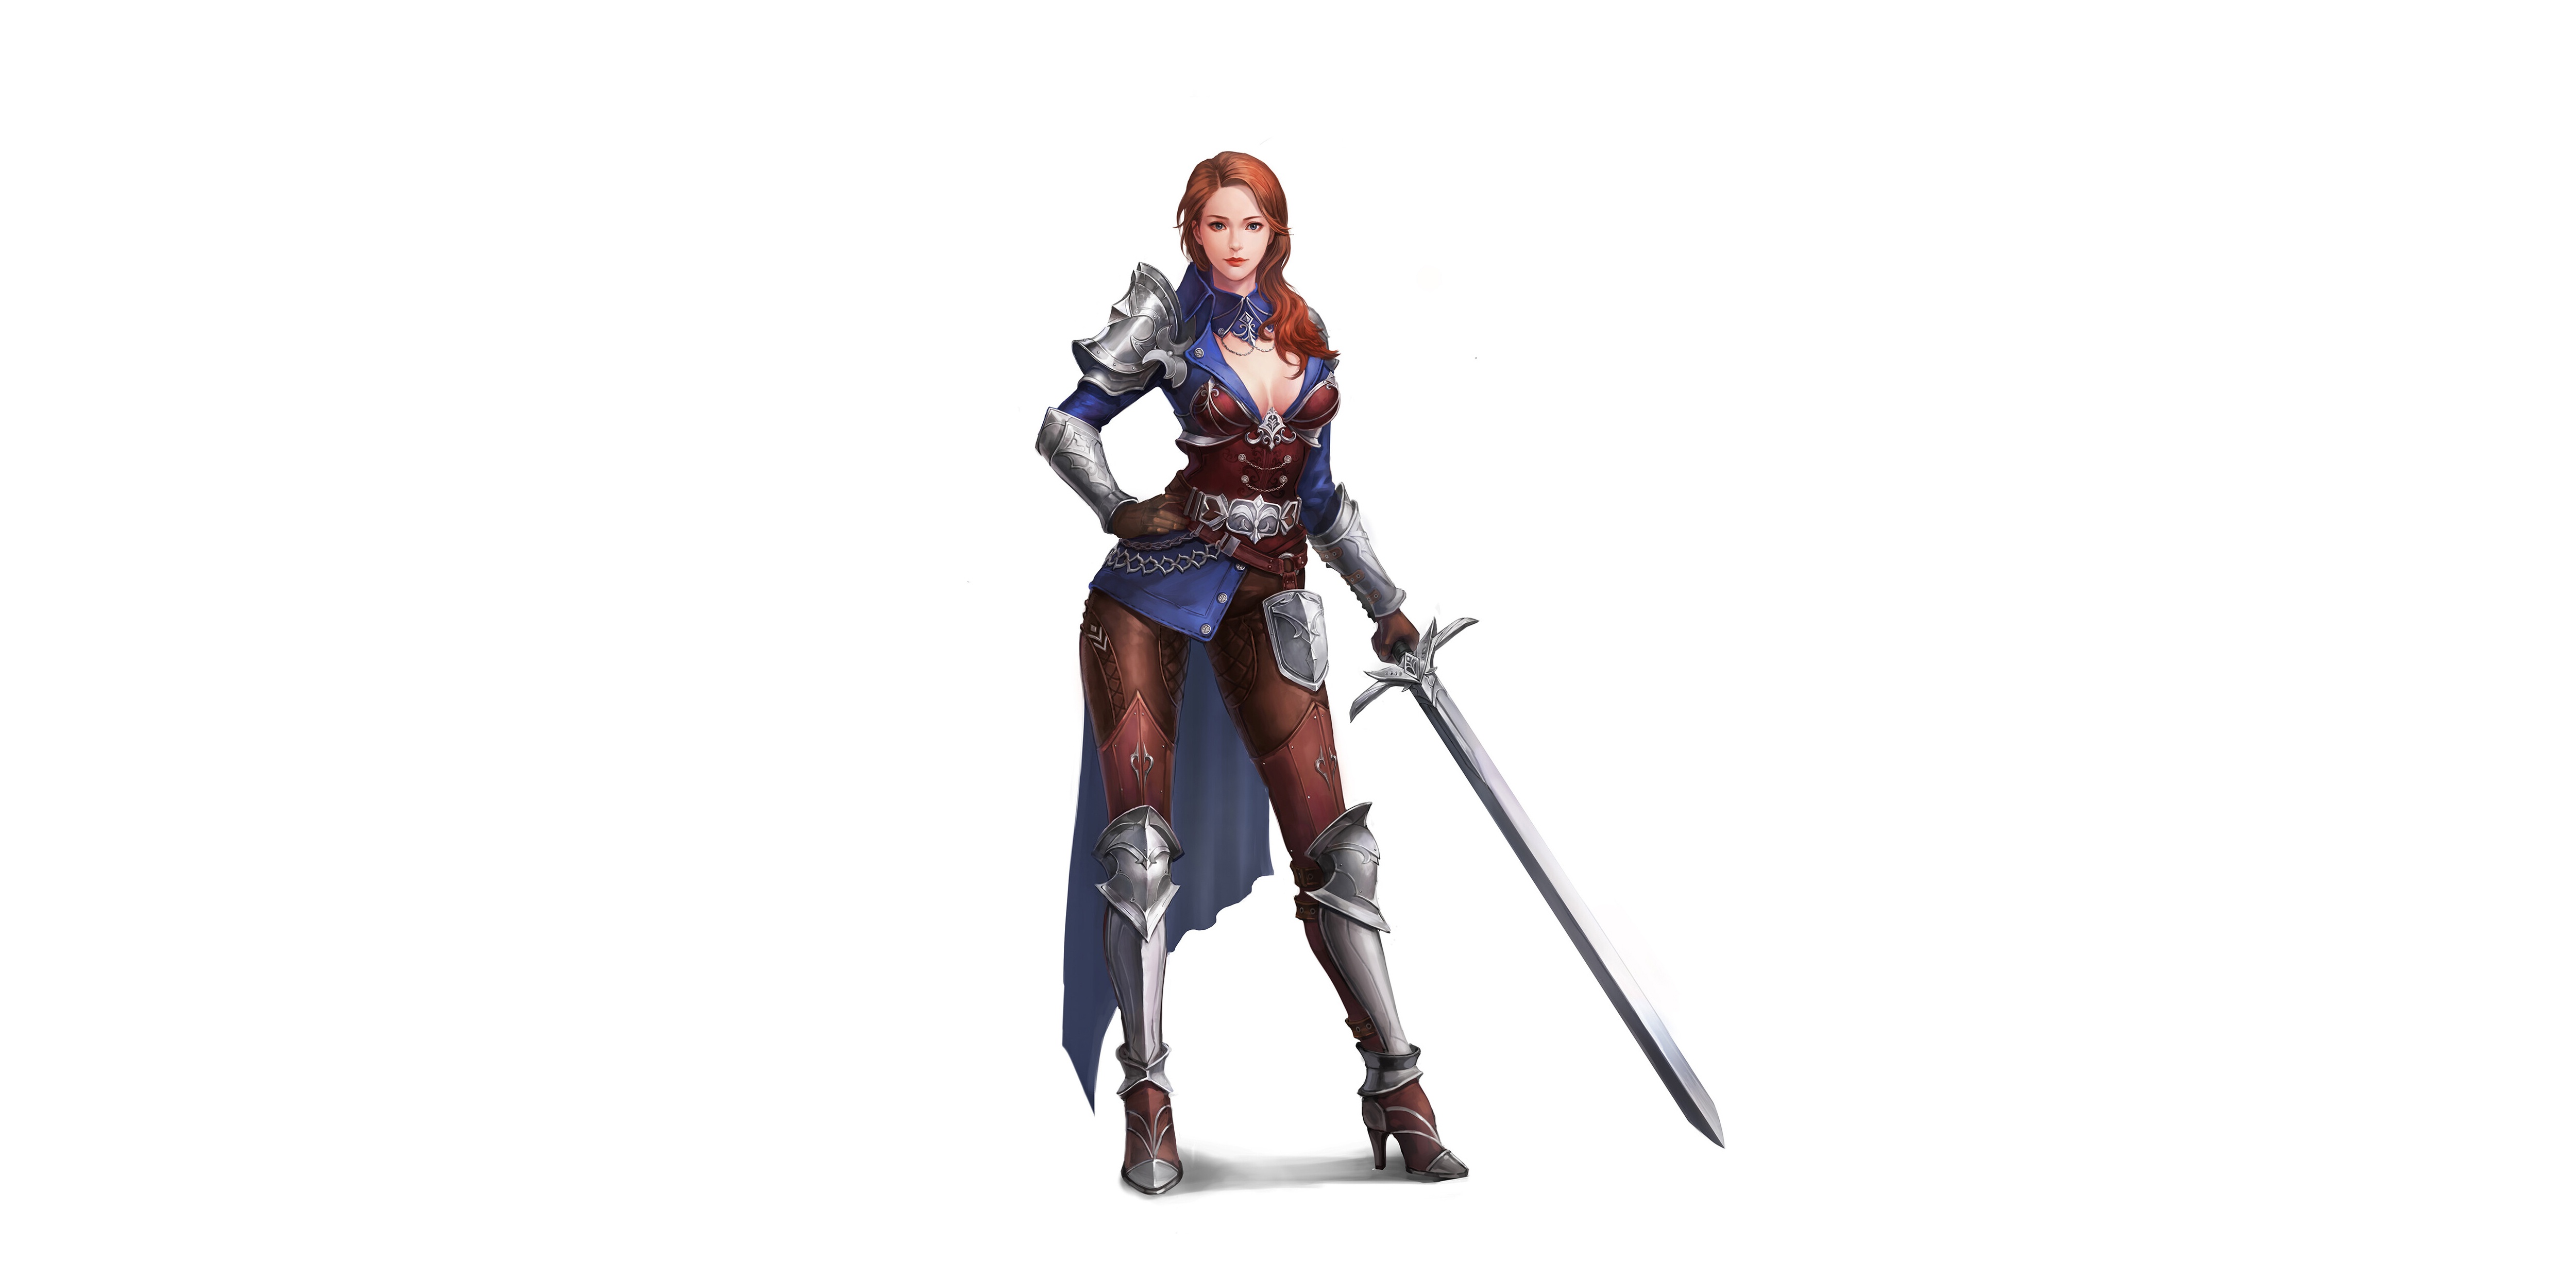 General 5000x2450 simple background white background sword armor fantasy girl fantasy art